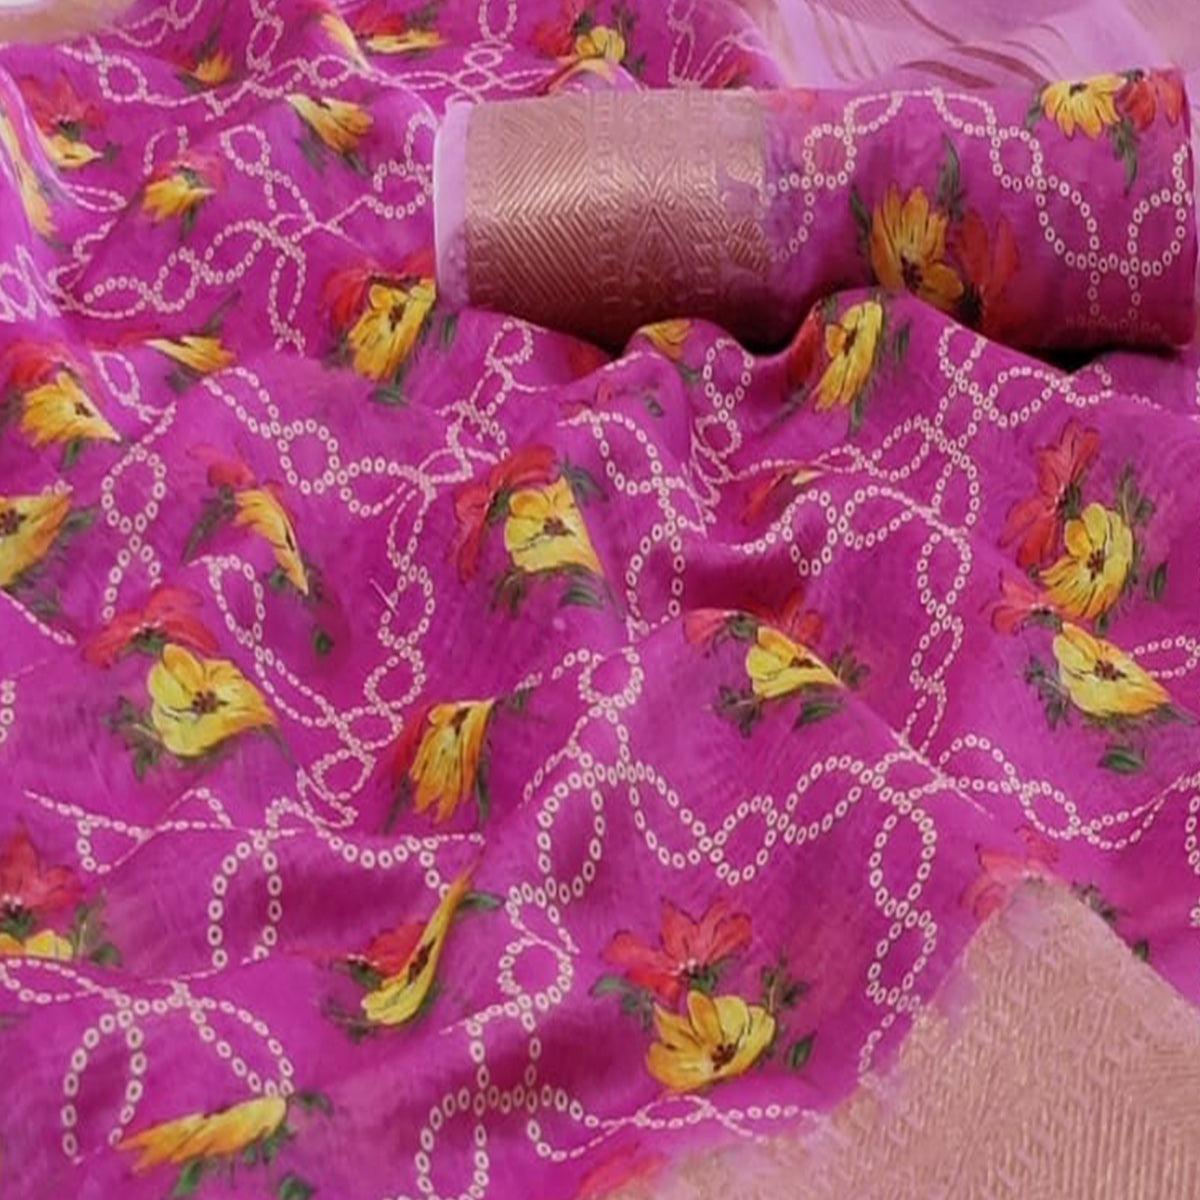 Groovy Pink Colored Festive Wear Woven Banarasi Silk Saree - Peachmode